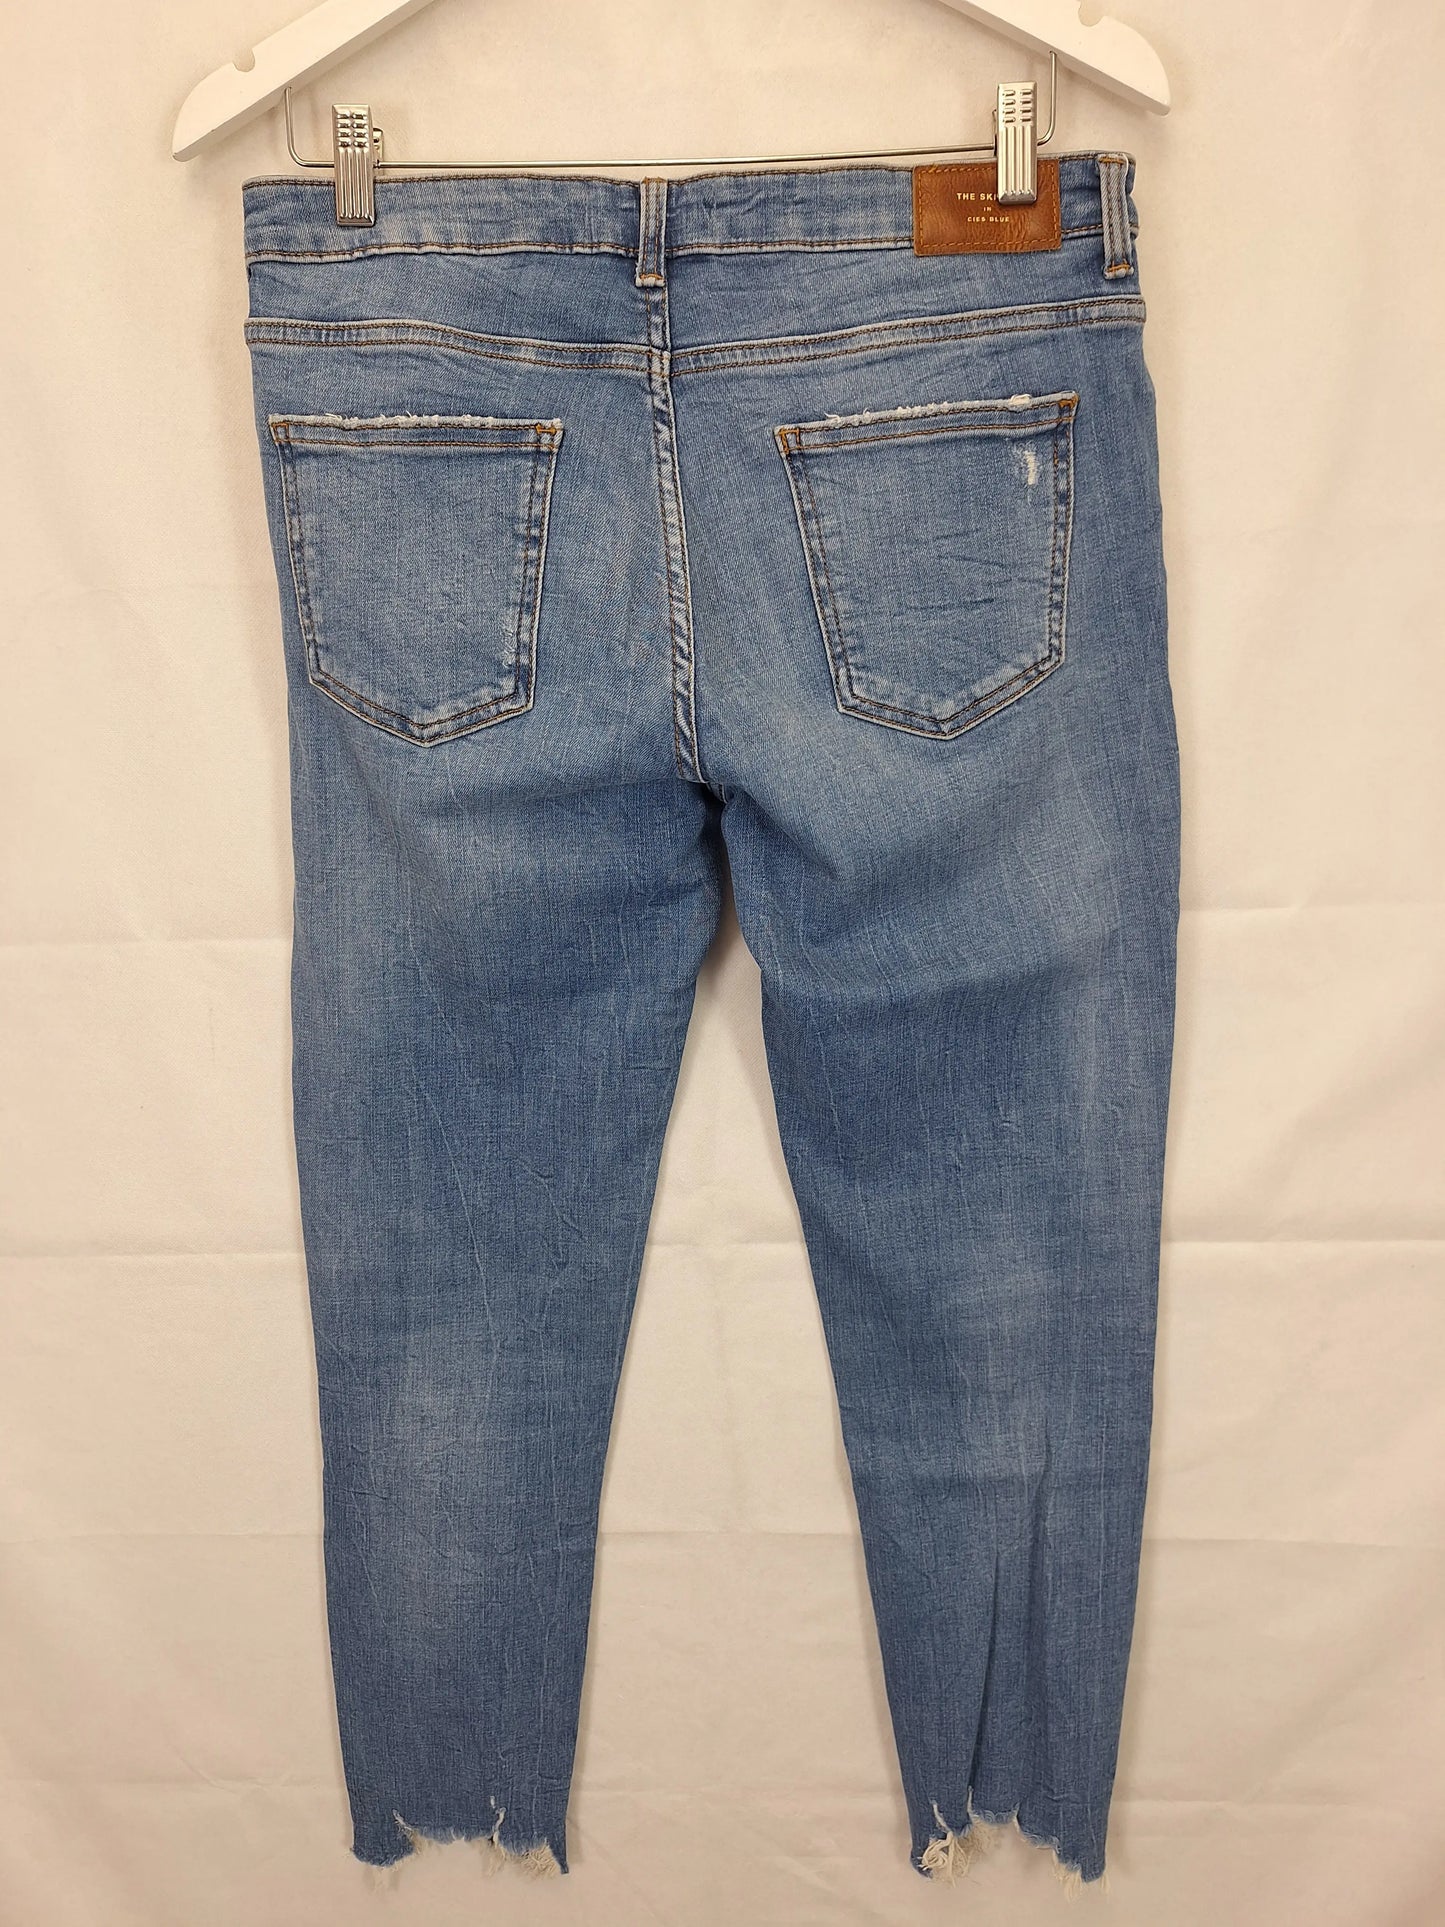 Zara Distressed Denim Jeans Size 14 by SwapUp-Online Second Hand Store-Online Thrift Store